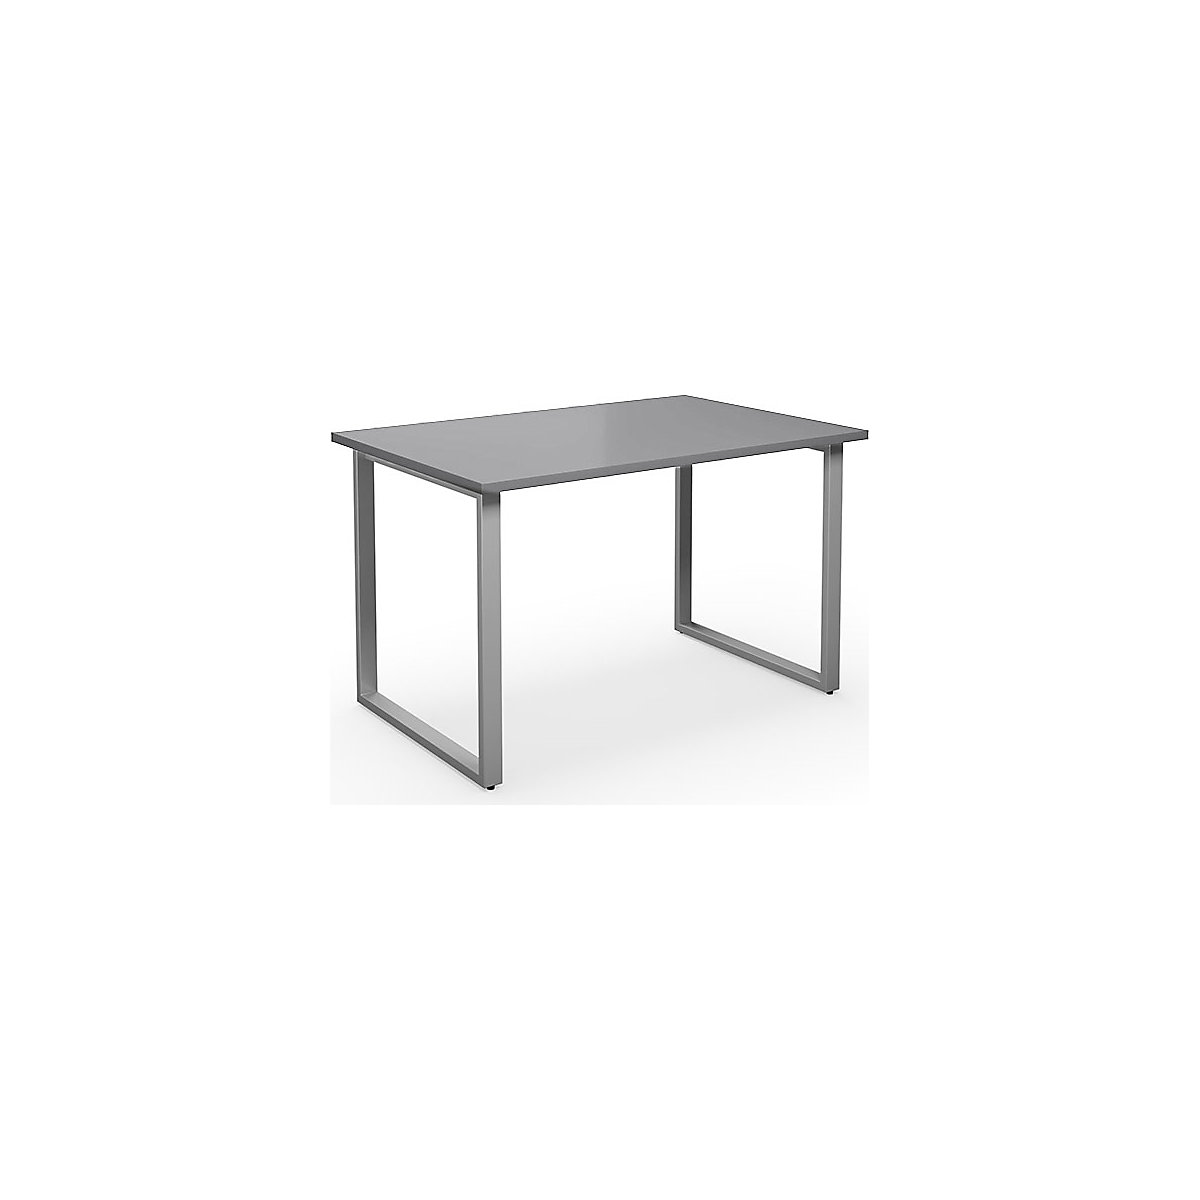 DUO-O multi-purpose desk, straight tabletop, WxD 1200 x 800 mm, light grey, silver-12